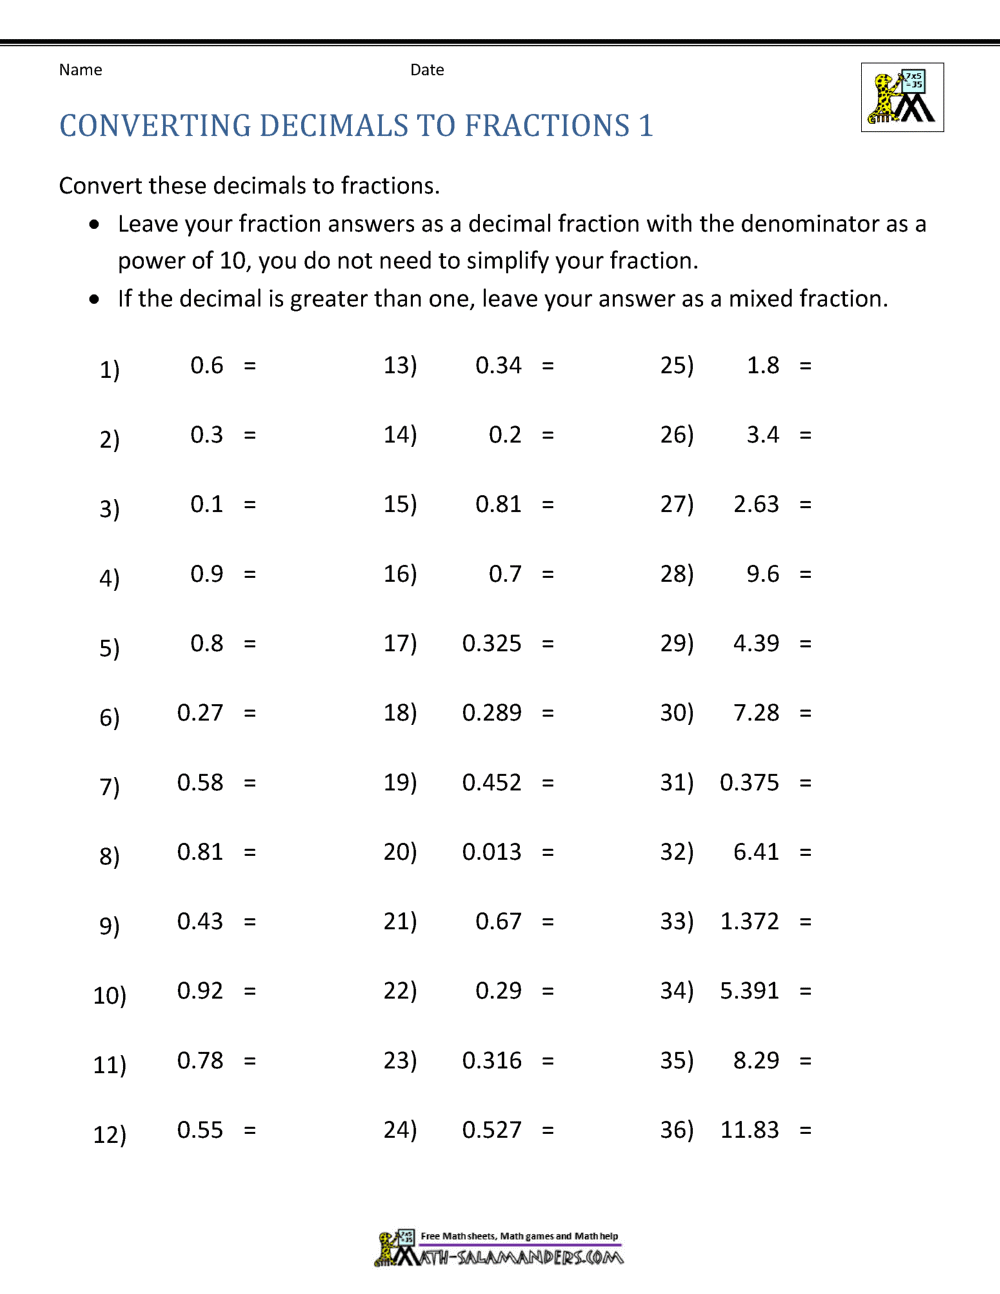 fractions-to-decimals-worksheet